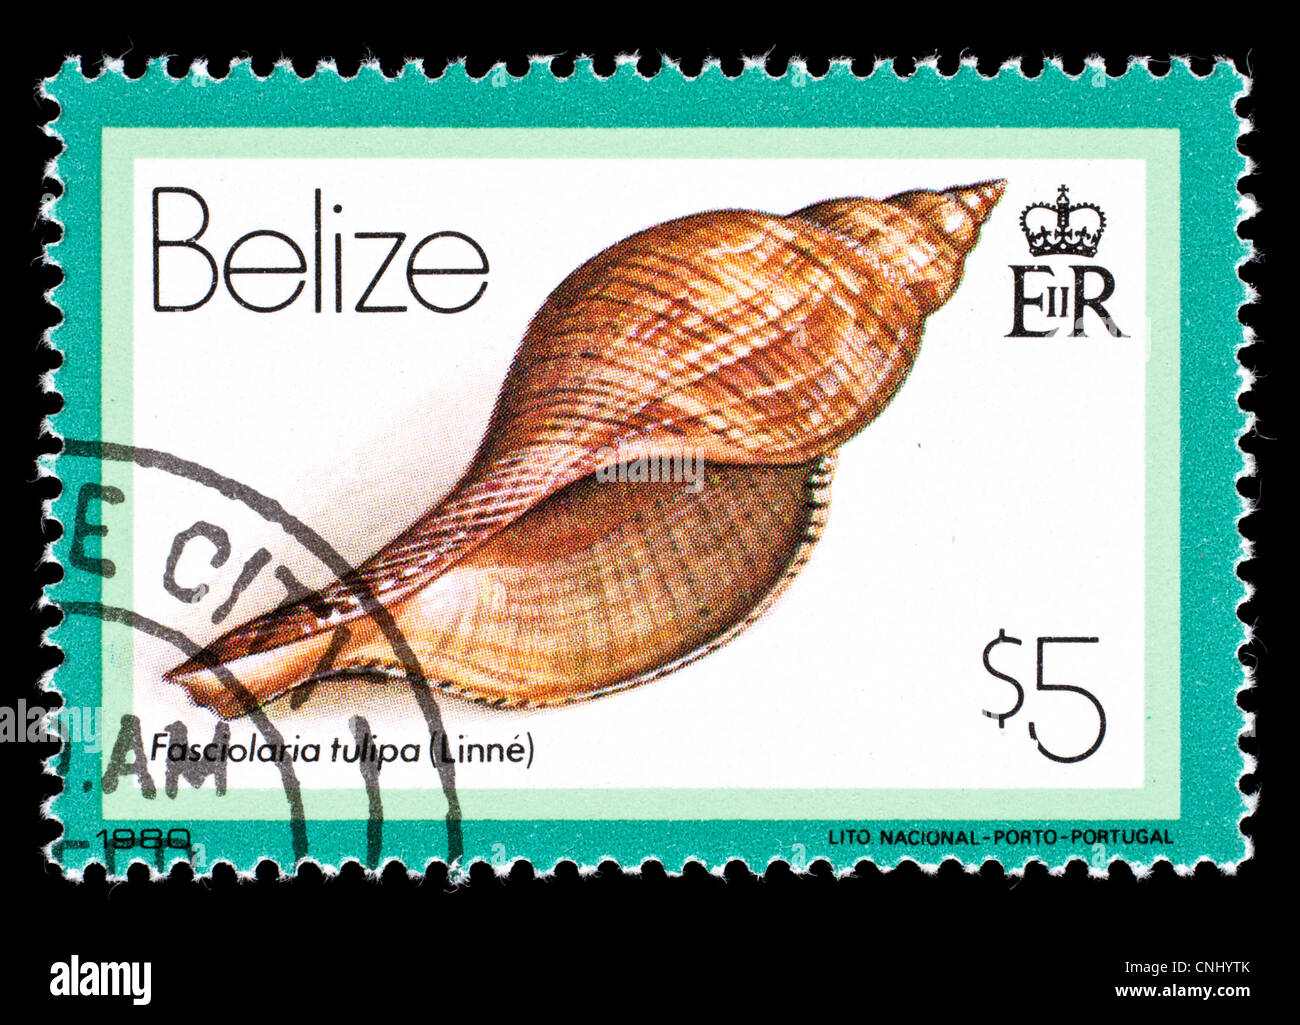 Postage stamp from Belize depicting a true tulip sea snail (Fasciolaria tulipa) Stock Photo